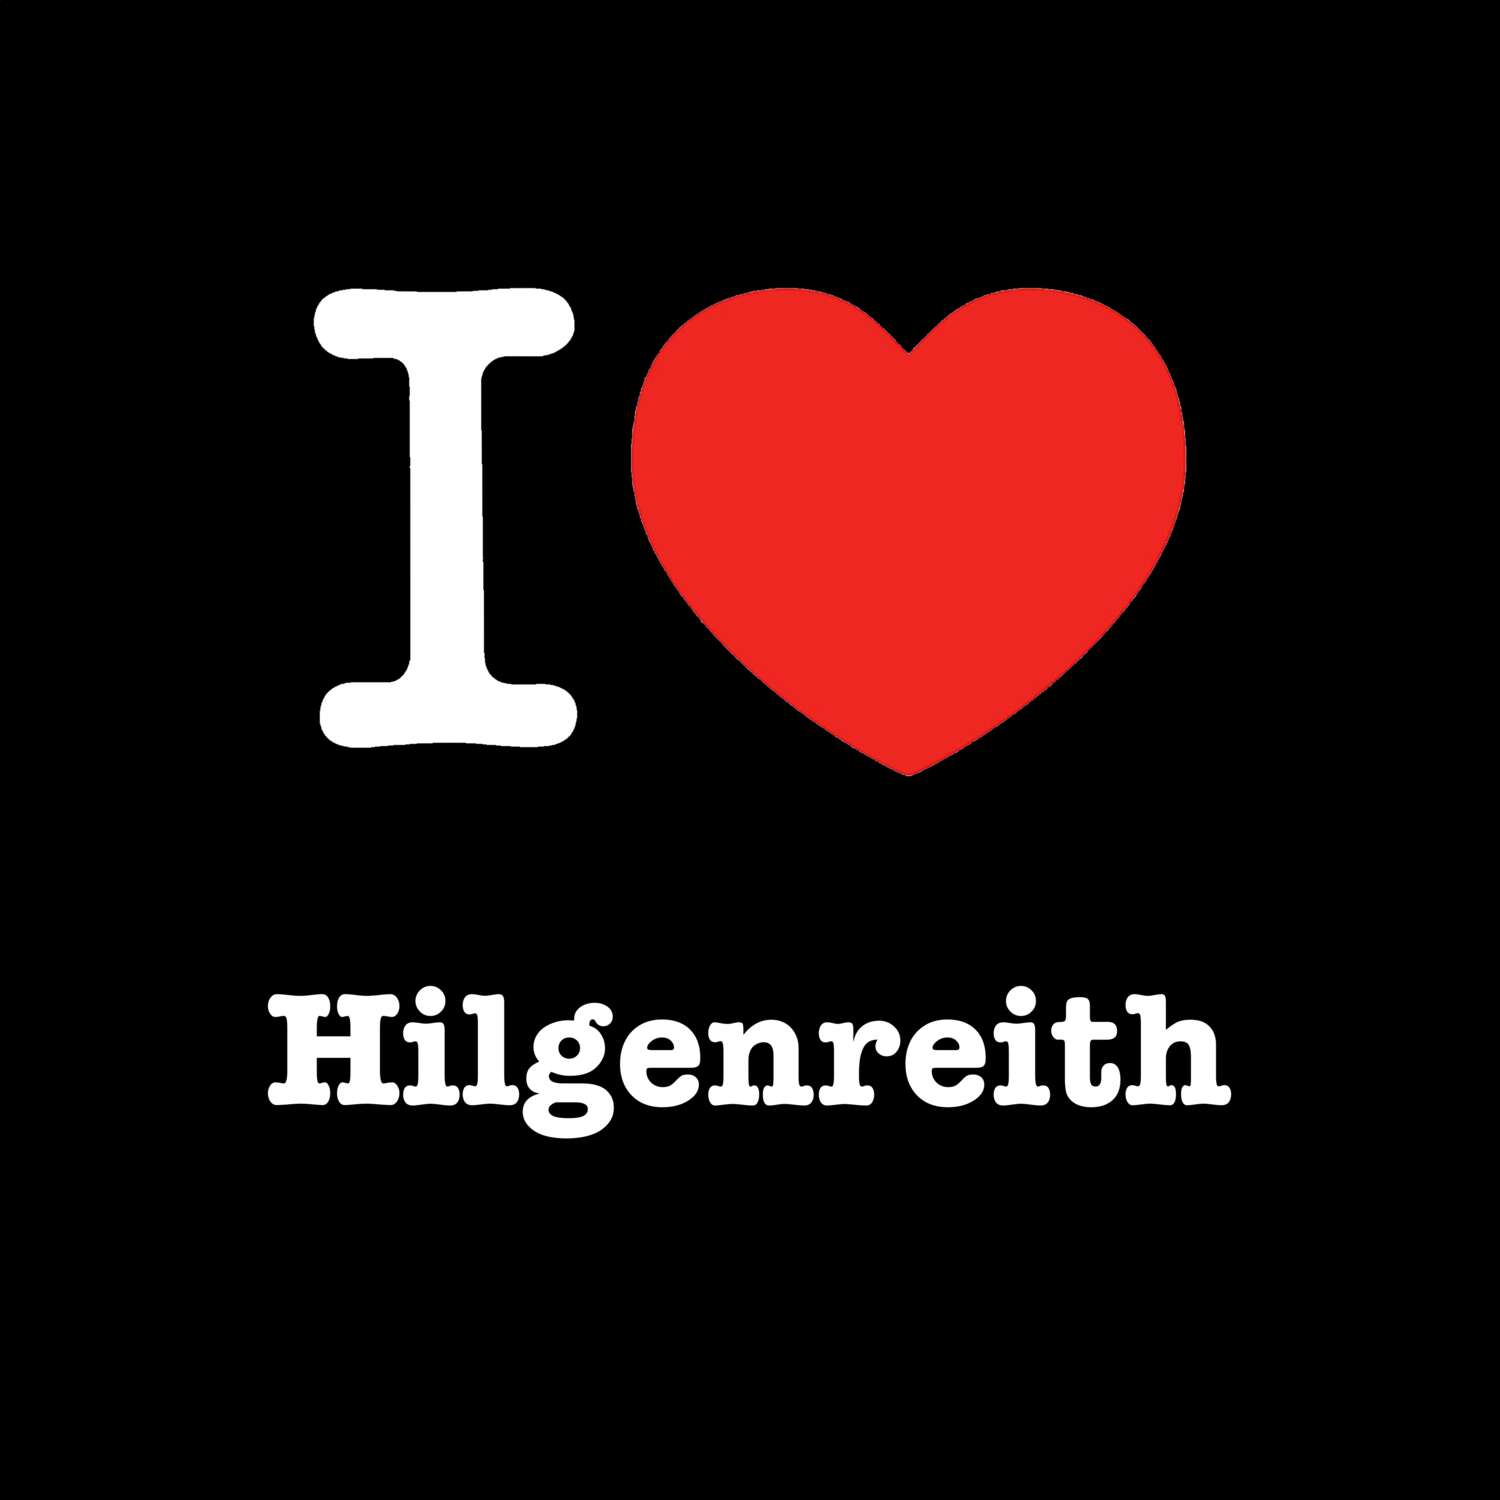 Hilgenreith T-Shirt »I love«